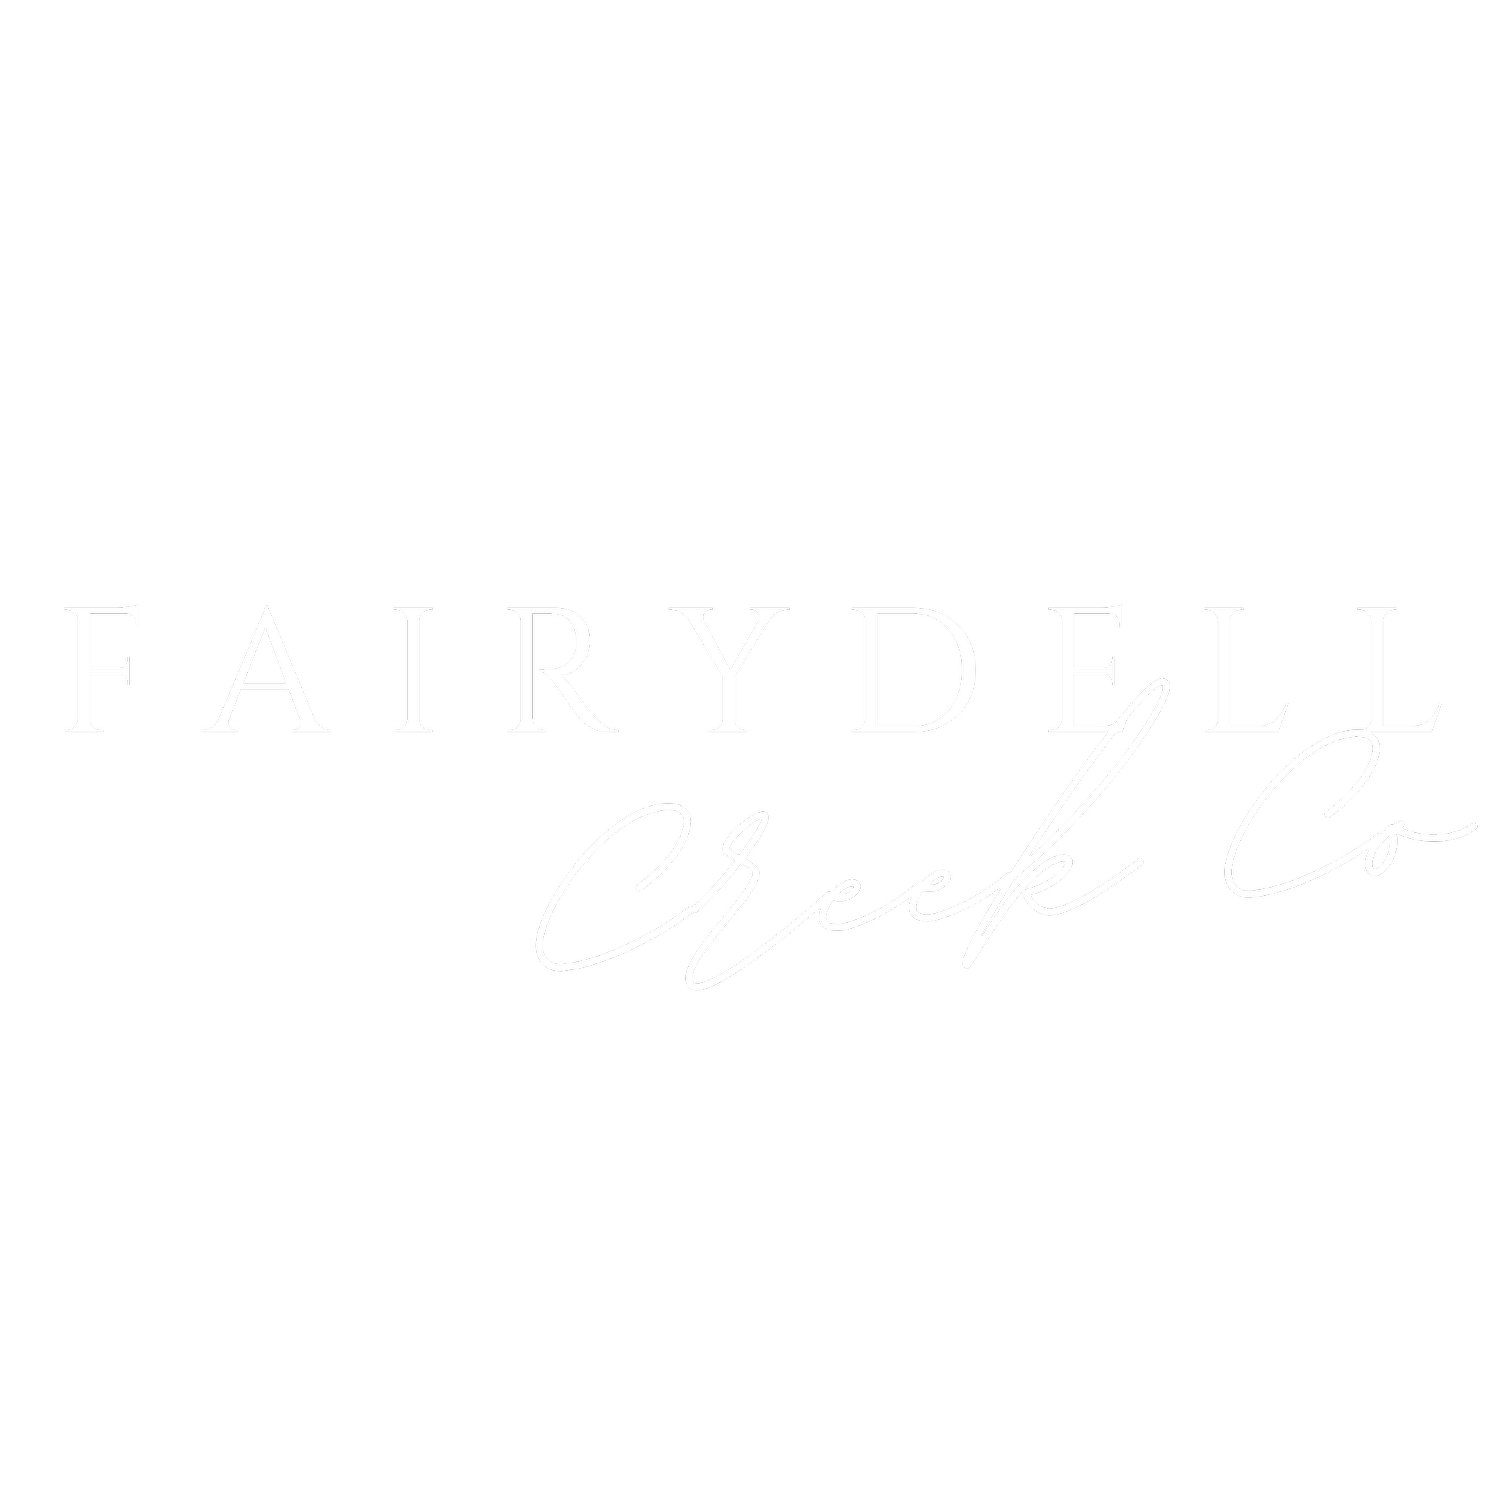 Fairydell Creek Co.